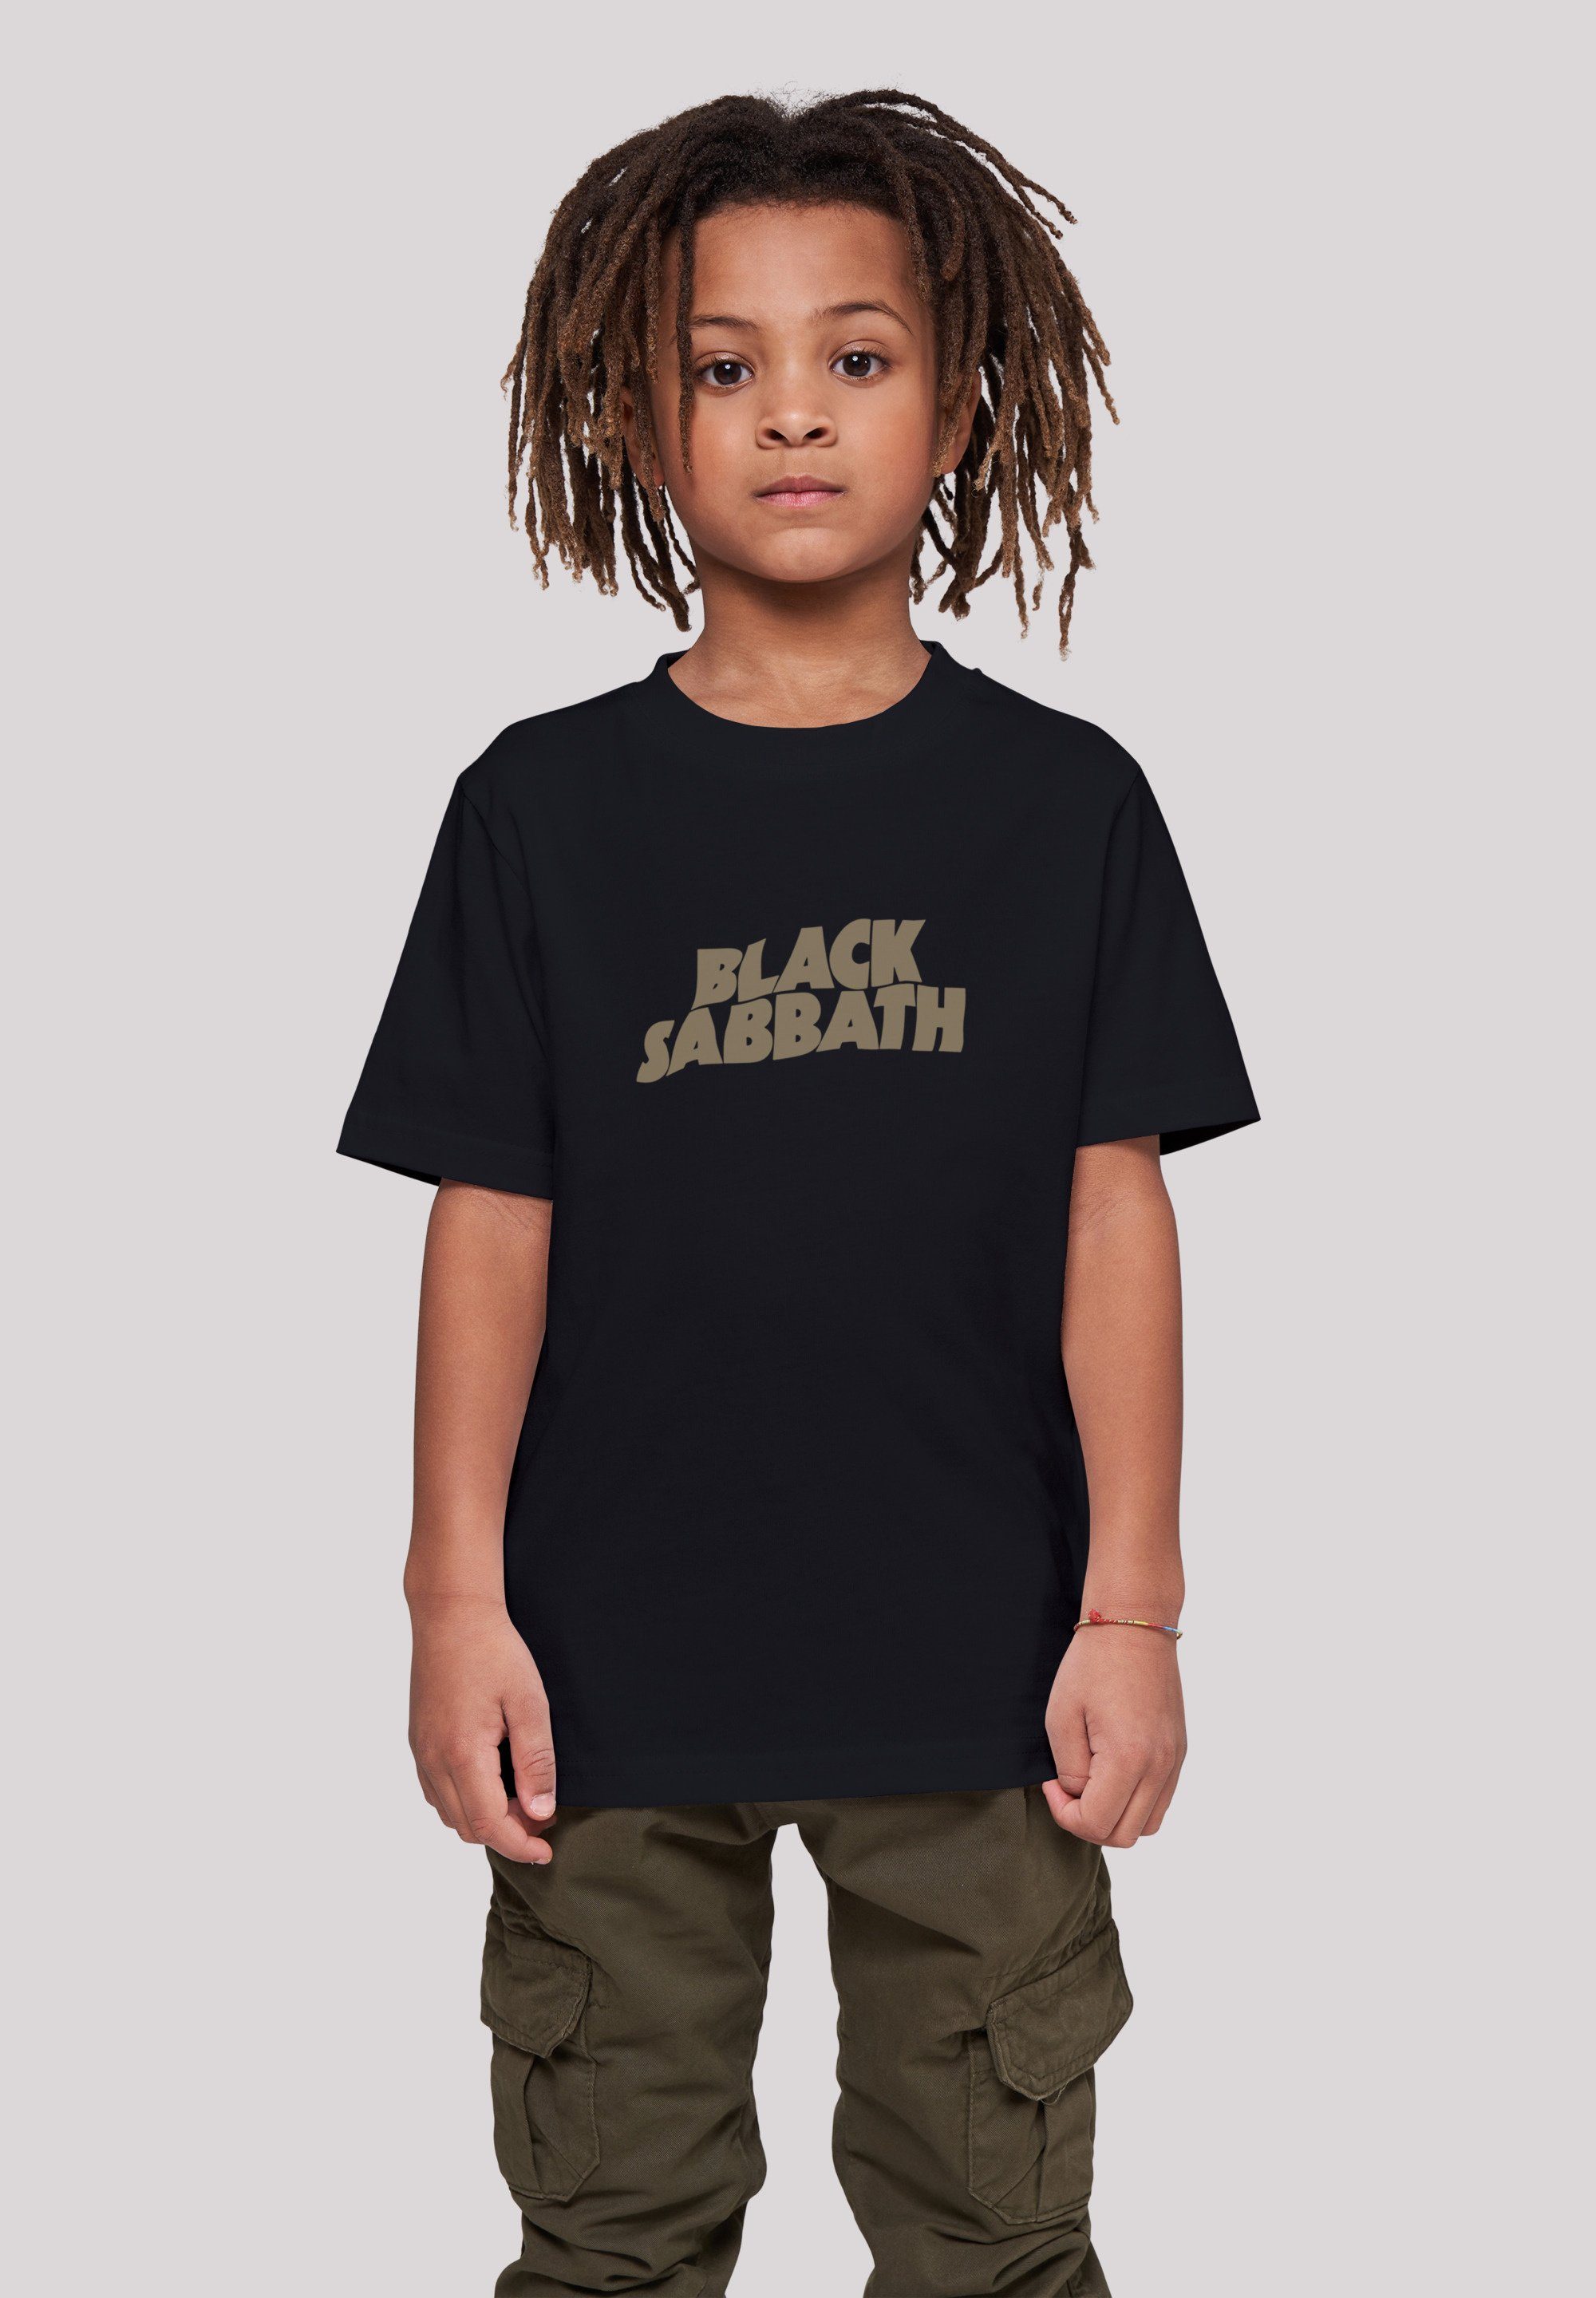 F4NT4STIC T-Shirt Band 1978 Metal Tour Zip Sabbath US Print Black Black